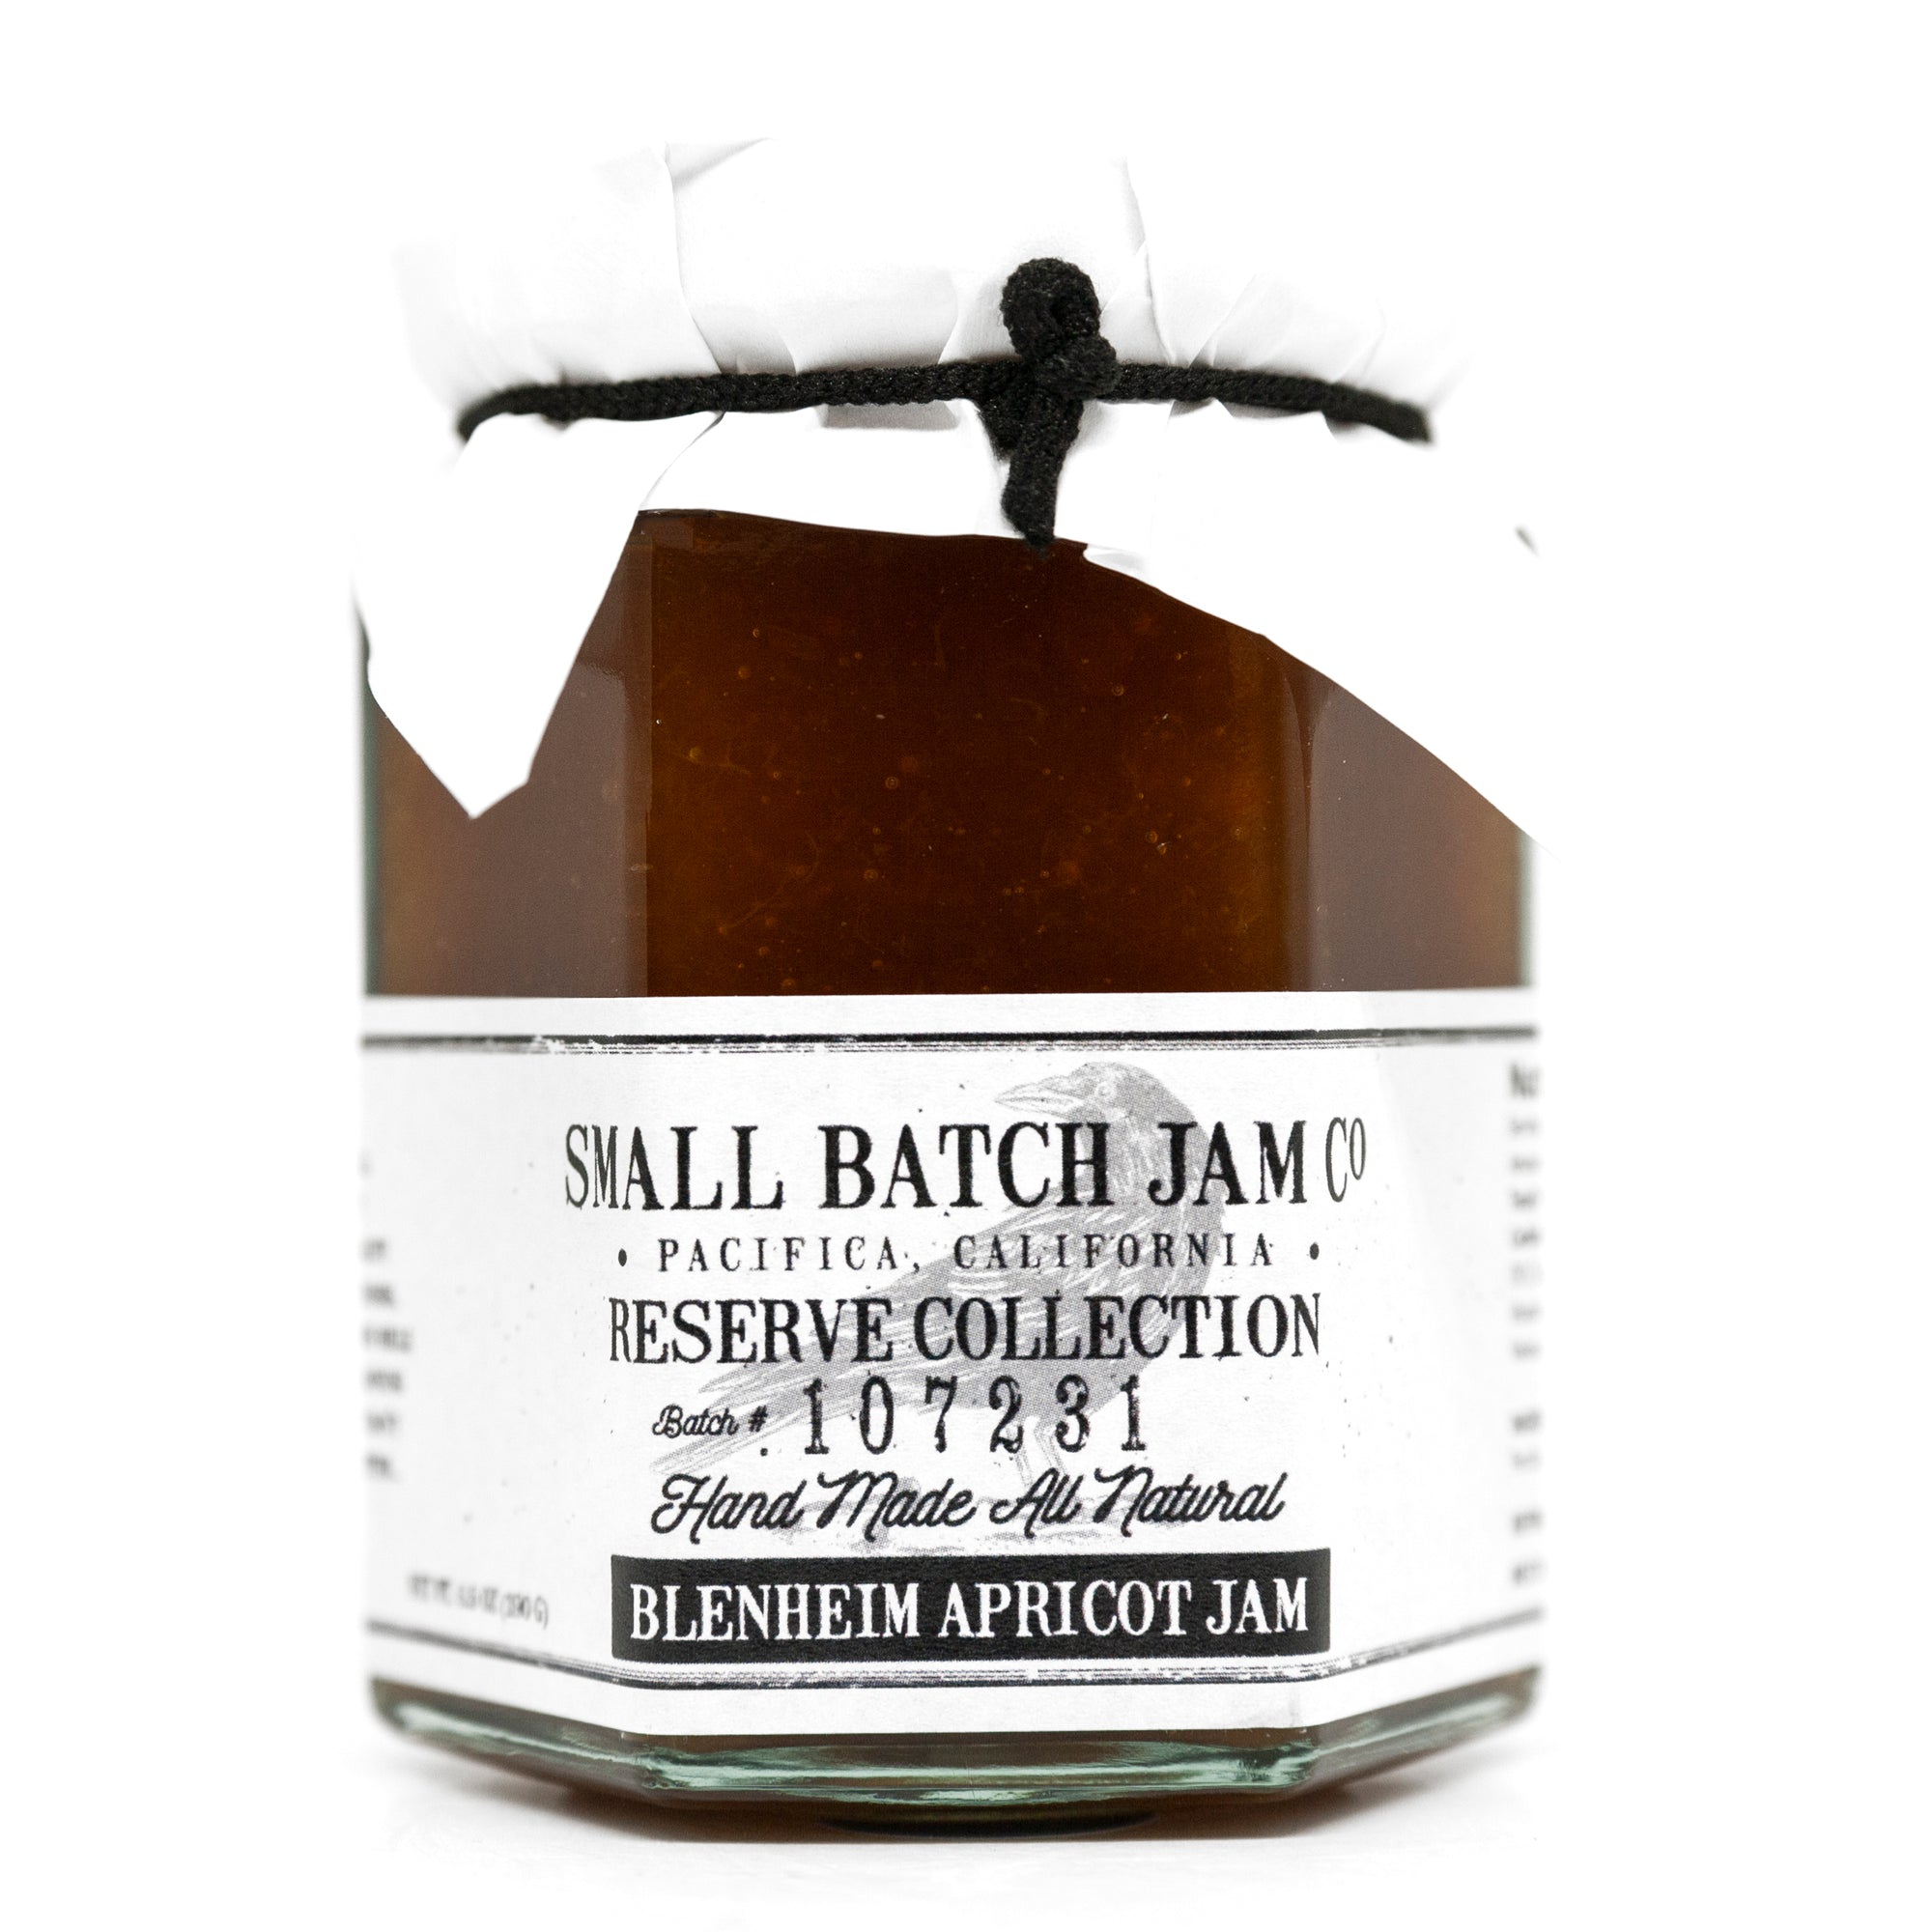 Blenheim Apricot Jam - Reserve Collection